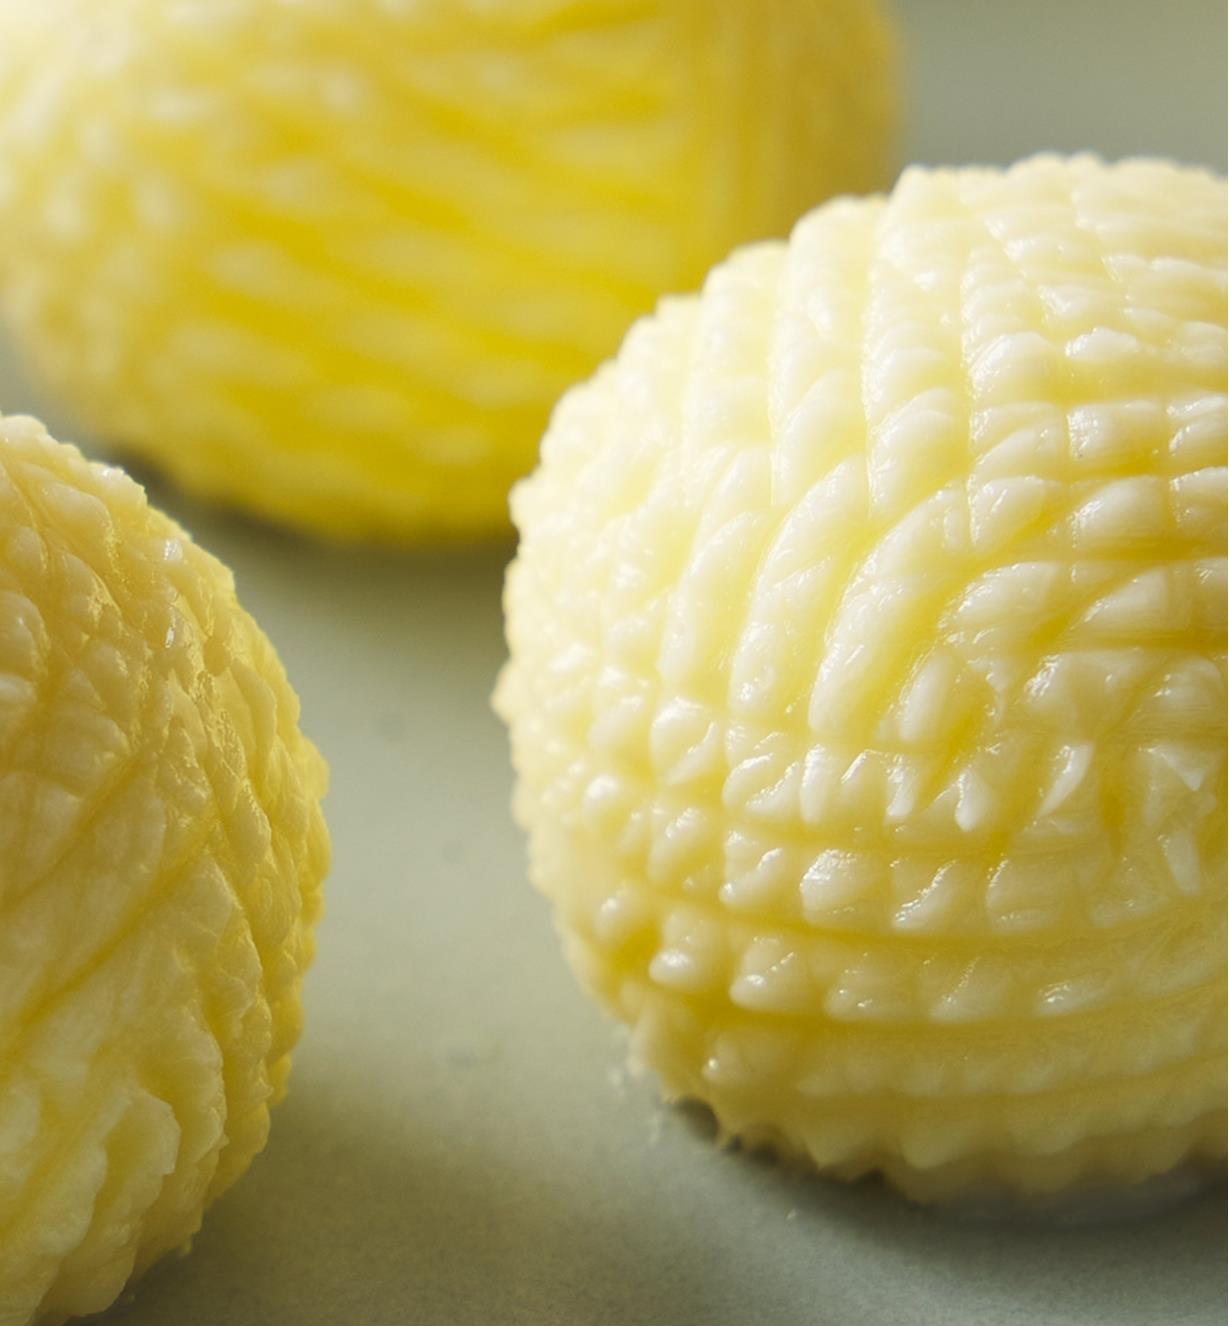 Three decorative, ridged balls of butter